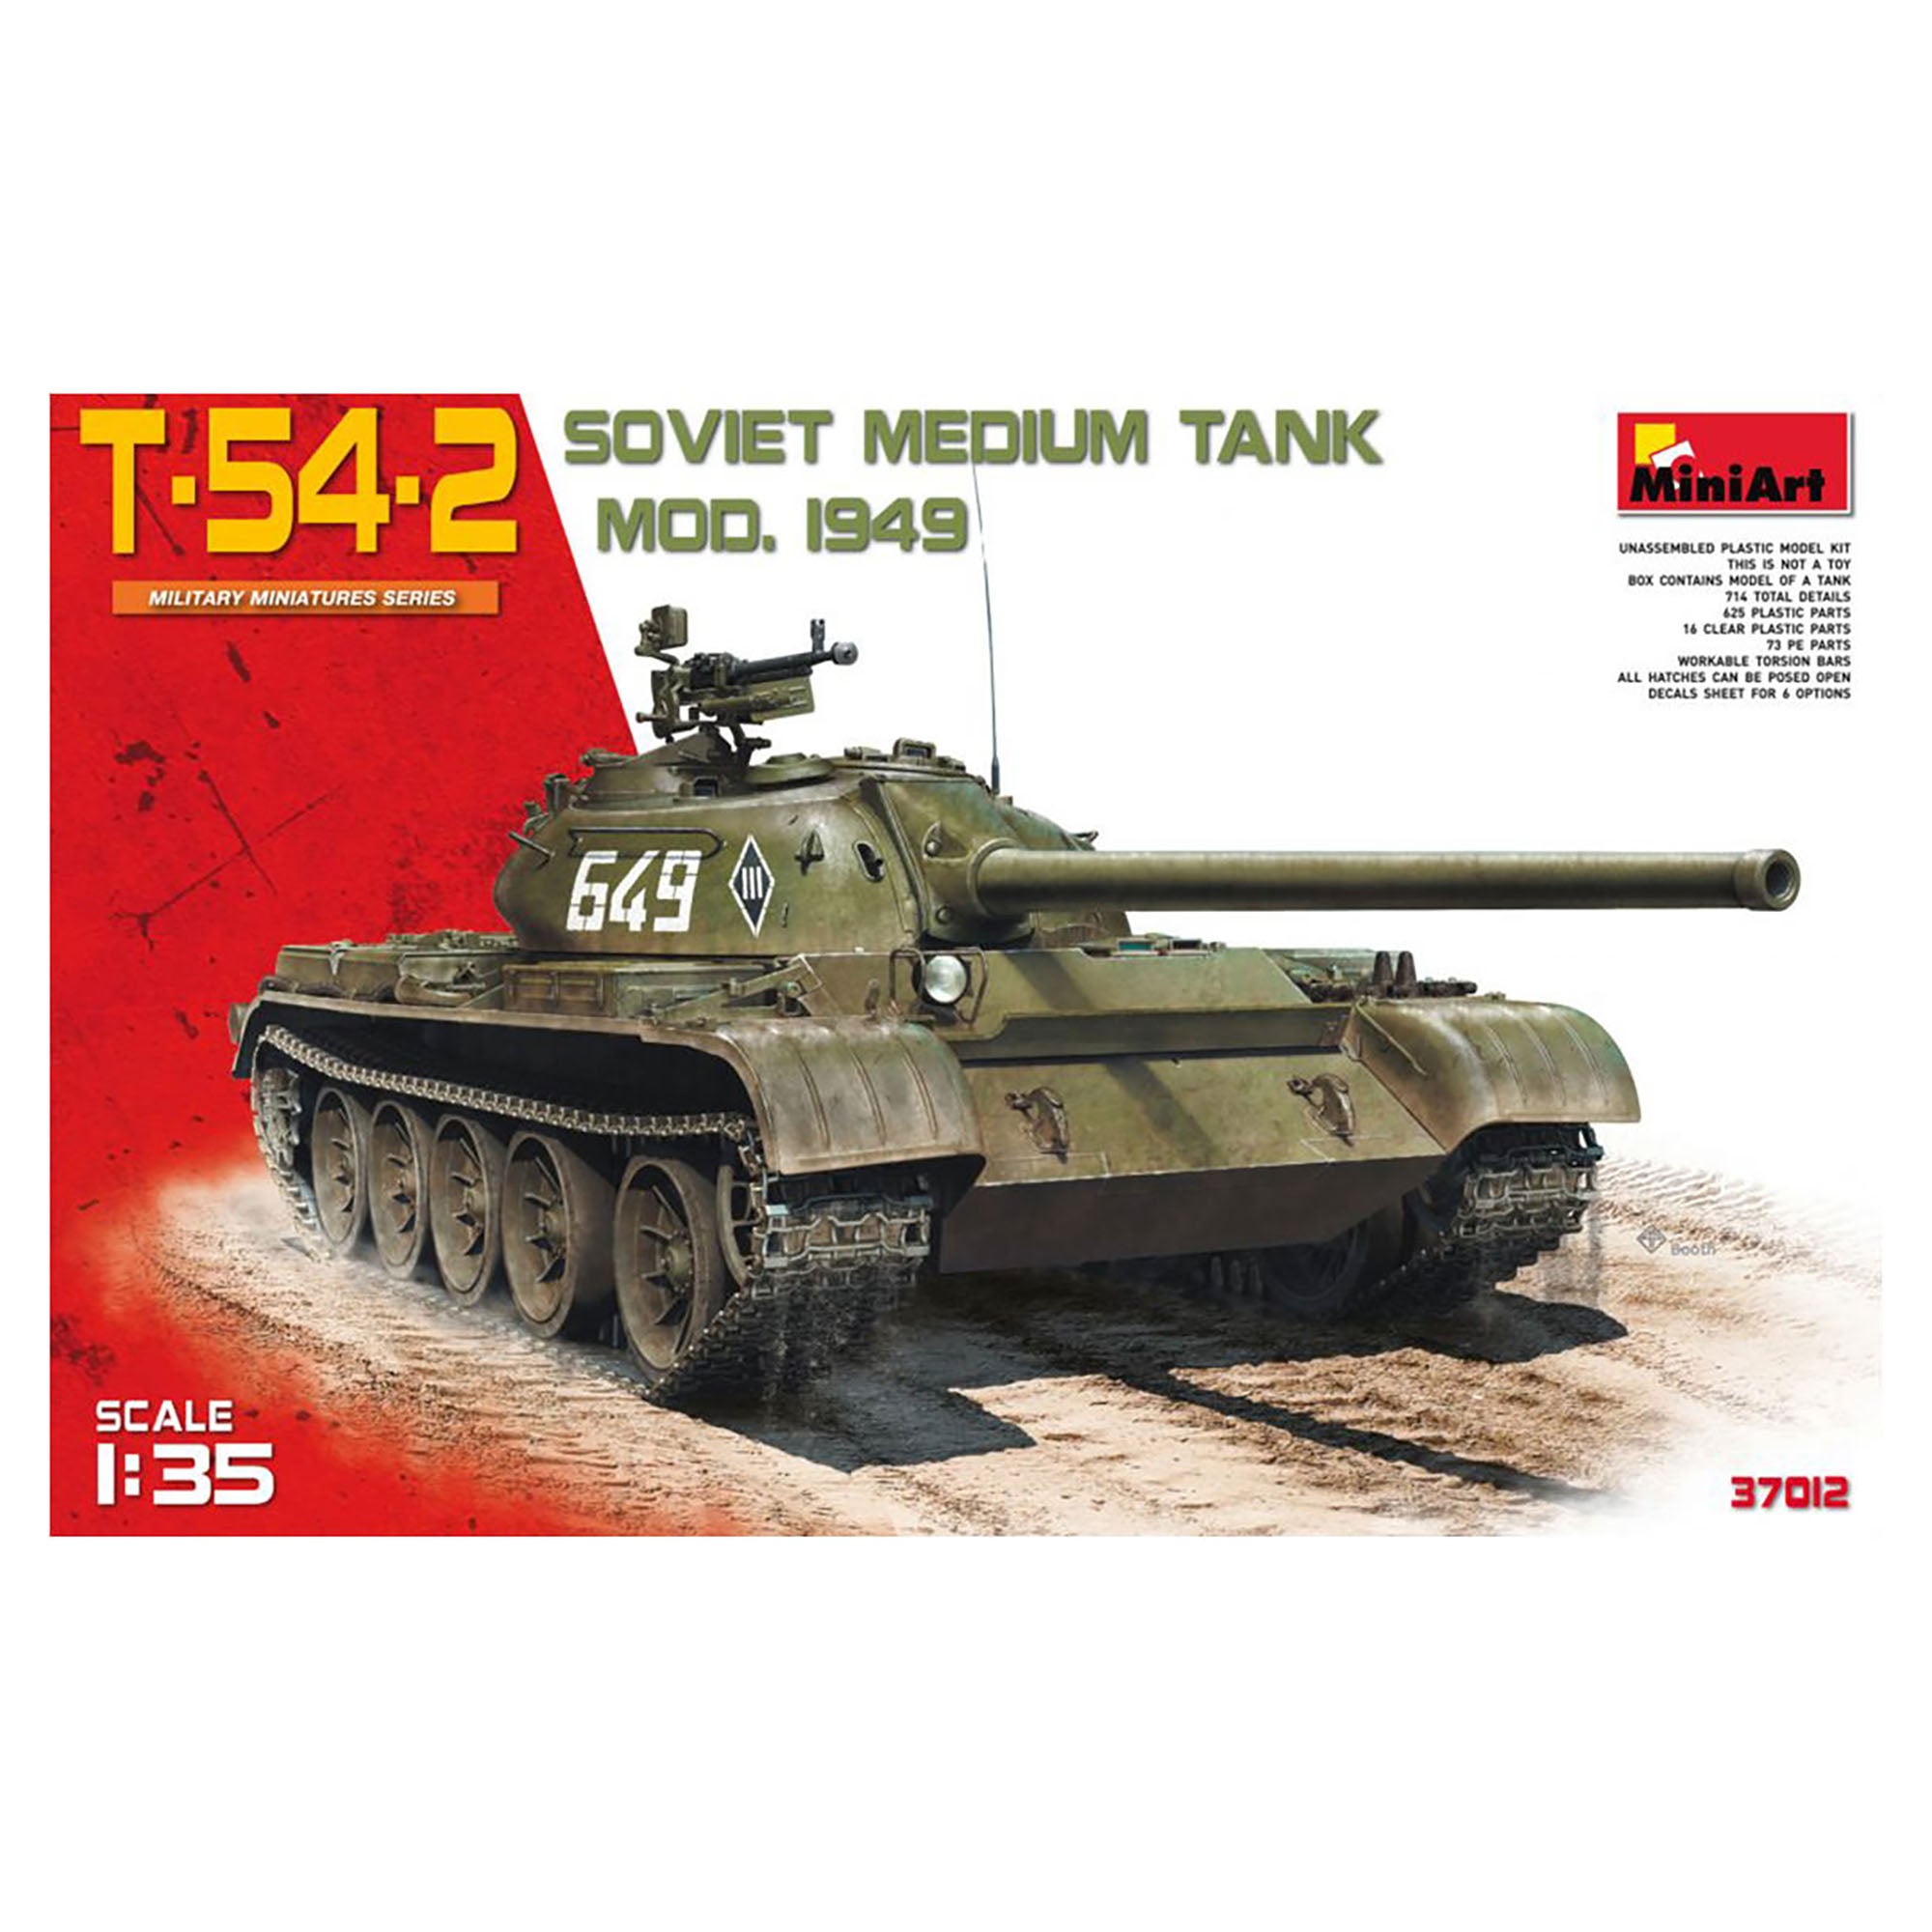 MiniArt 37012 1/35 T-54-2 Soviet Medium Tank Mod. 1949 Model Kit